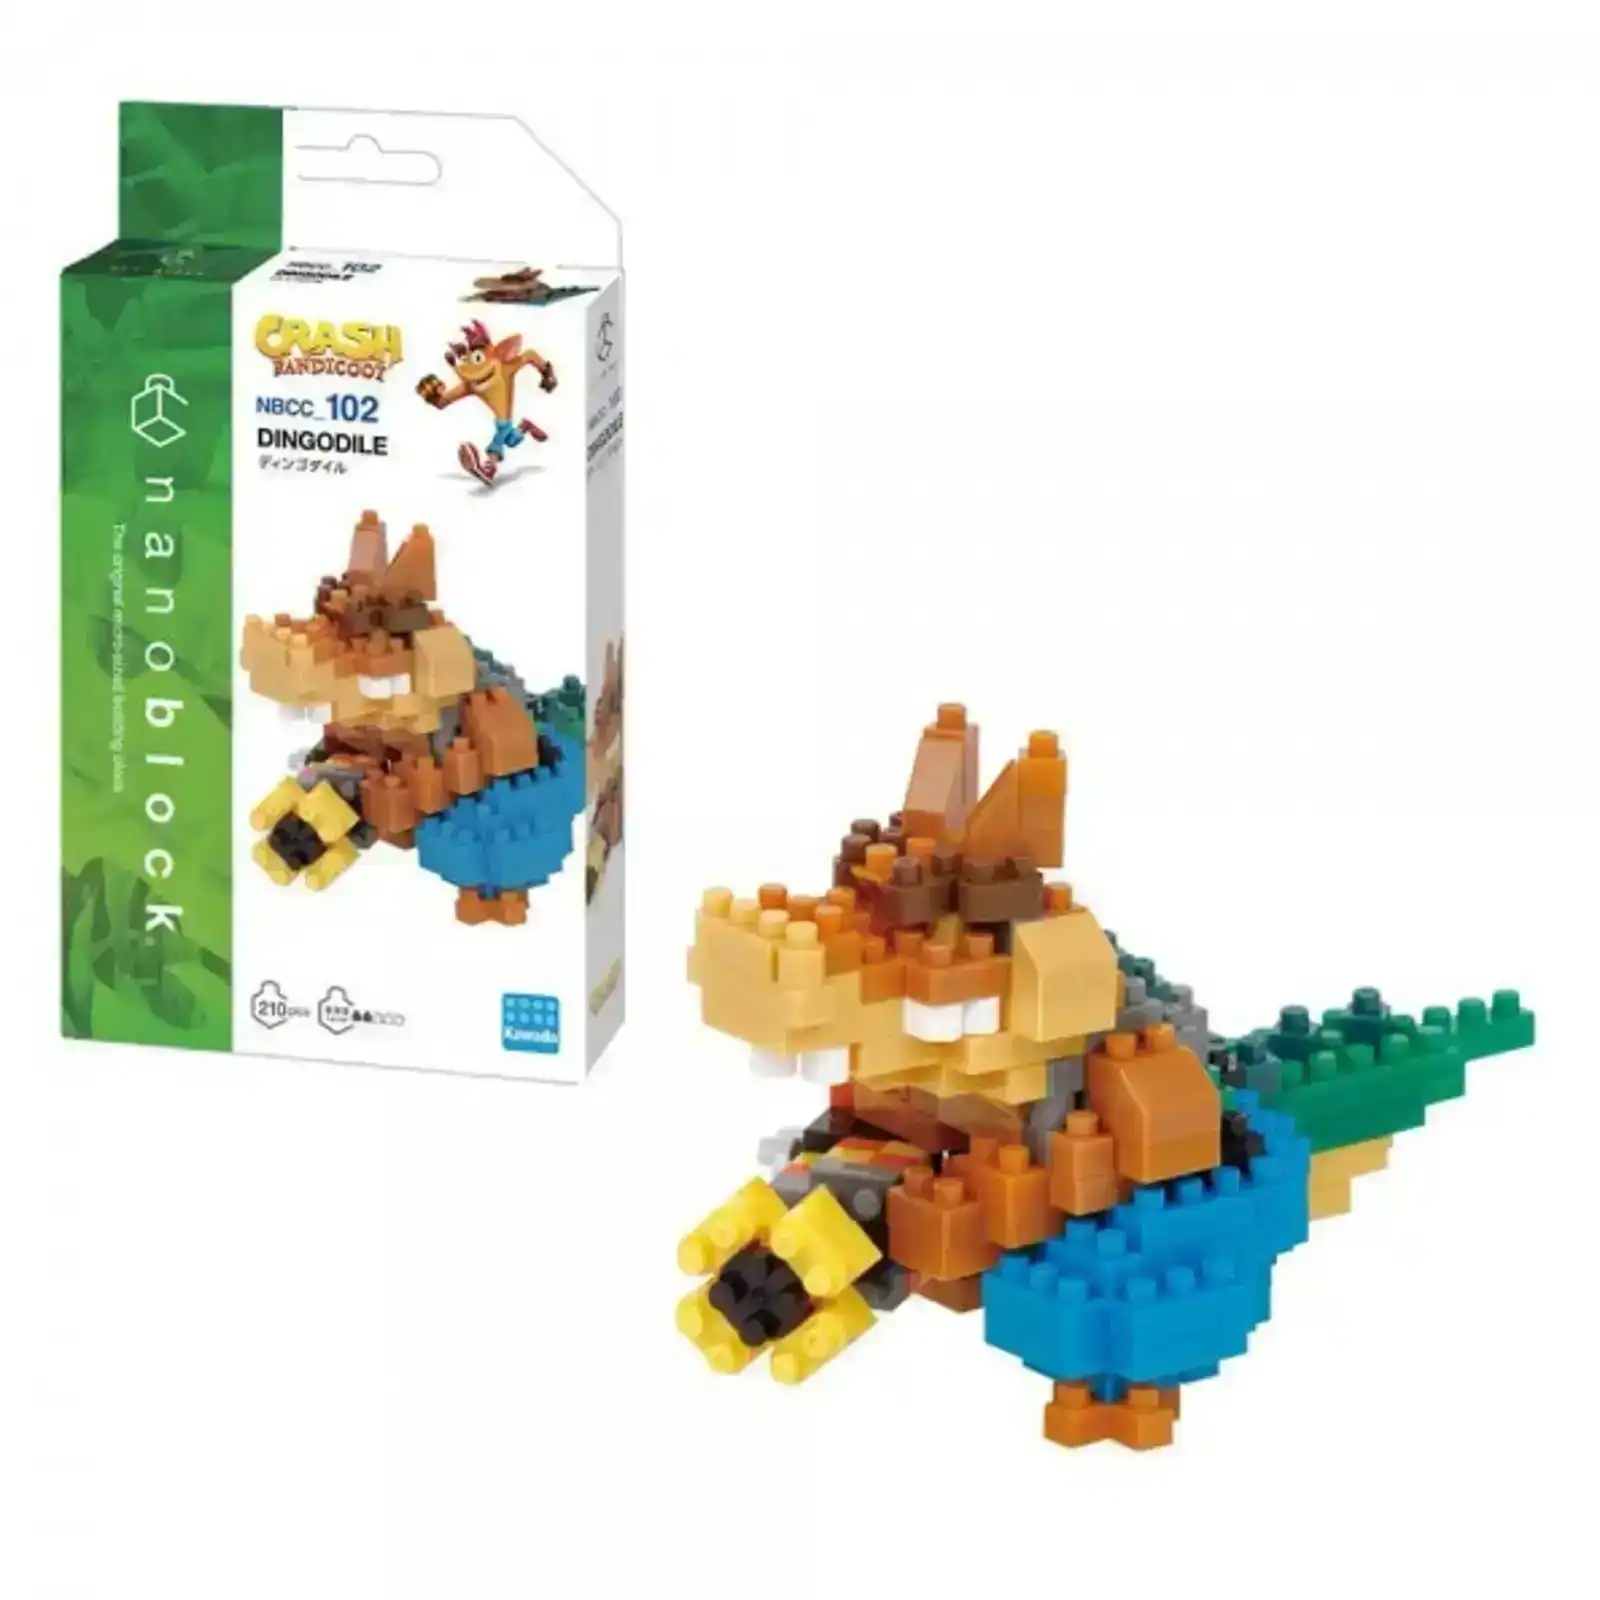 Nanoblock Crash Bandicoot Dingodile Interlocking Building Blocks Character 210pc